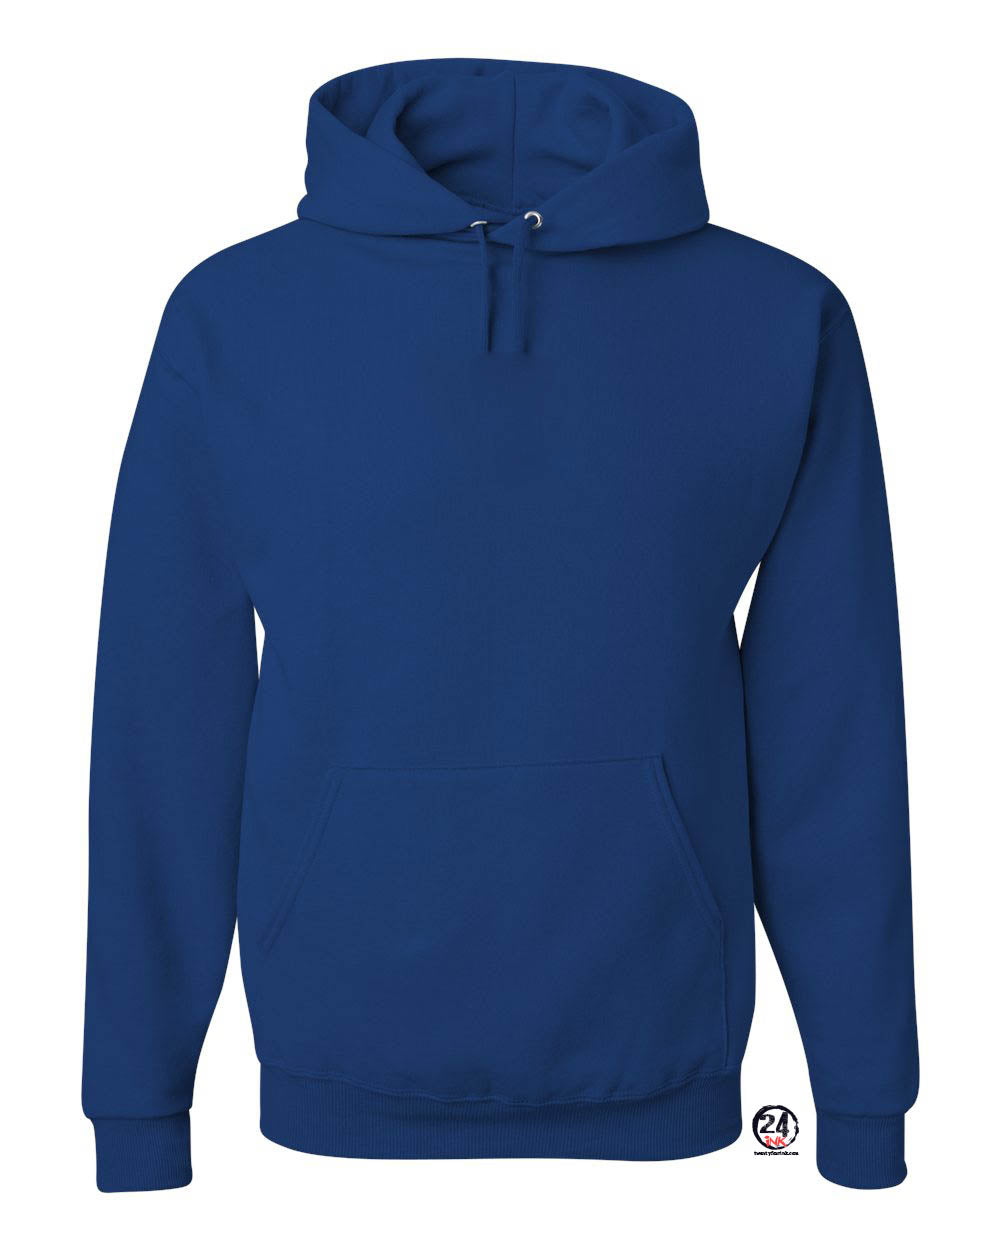 Hilltop Country Day School Design 3 Hooded Sweatshirt